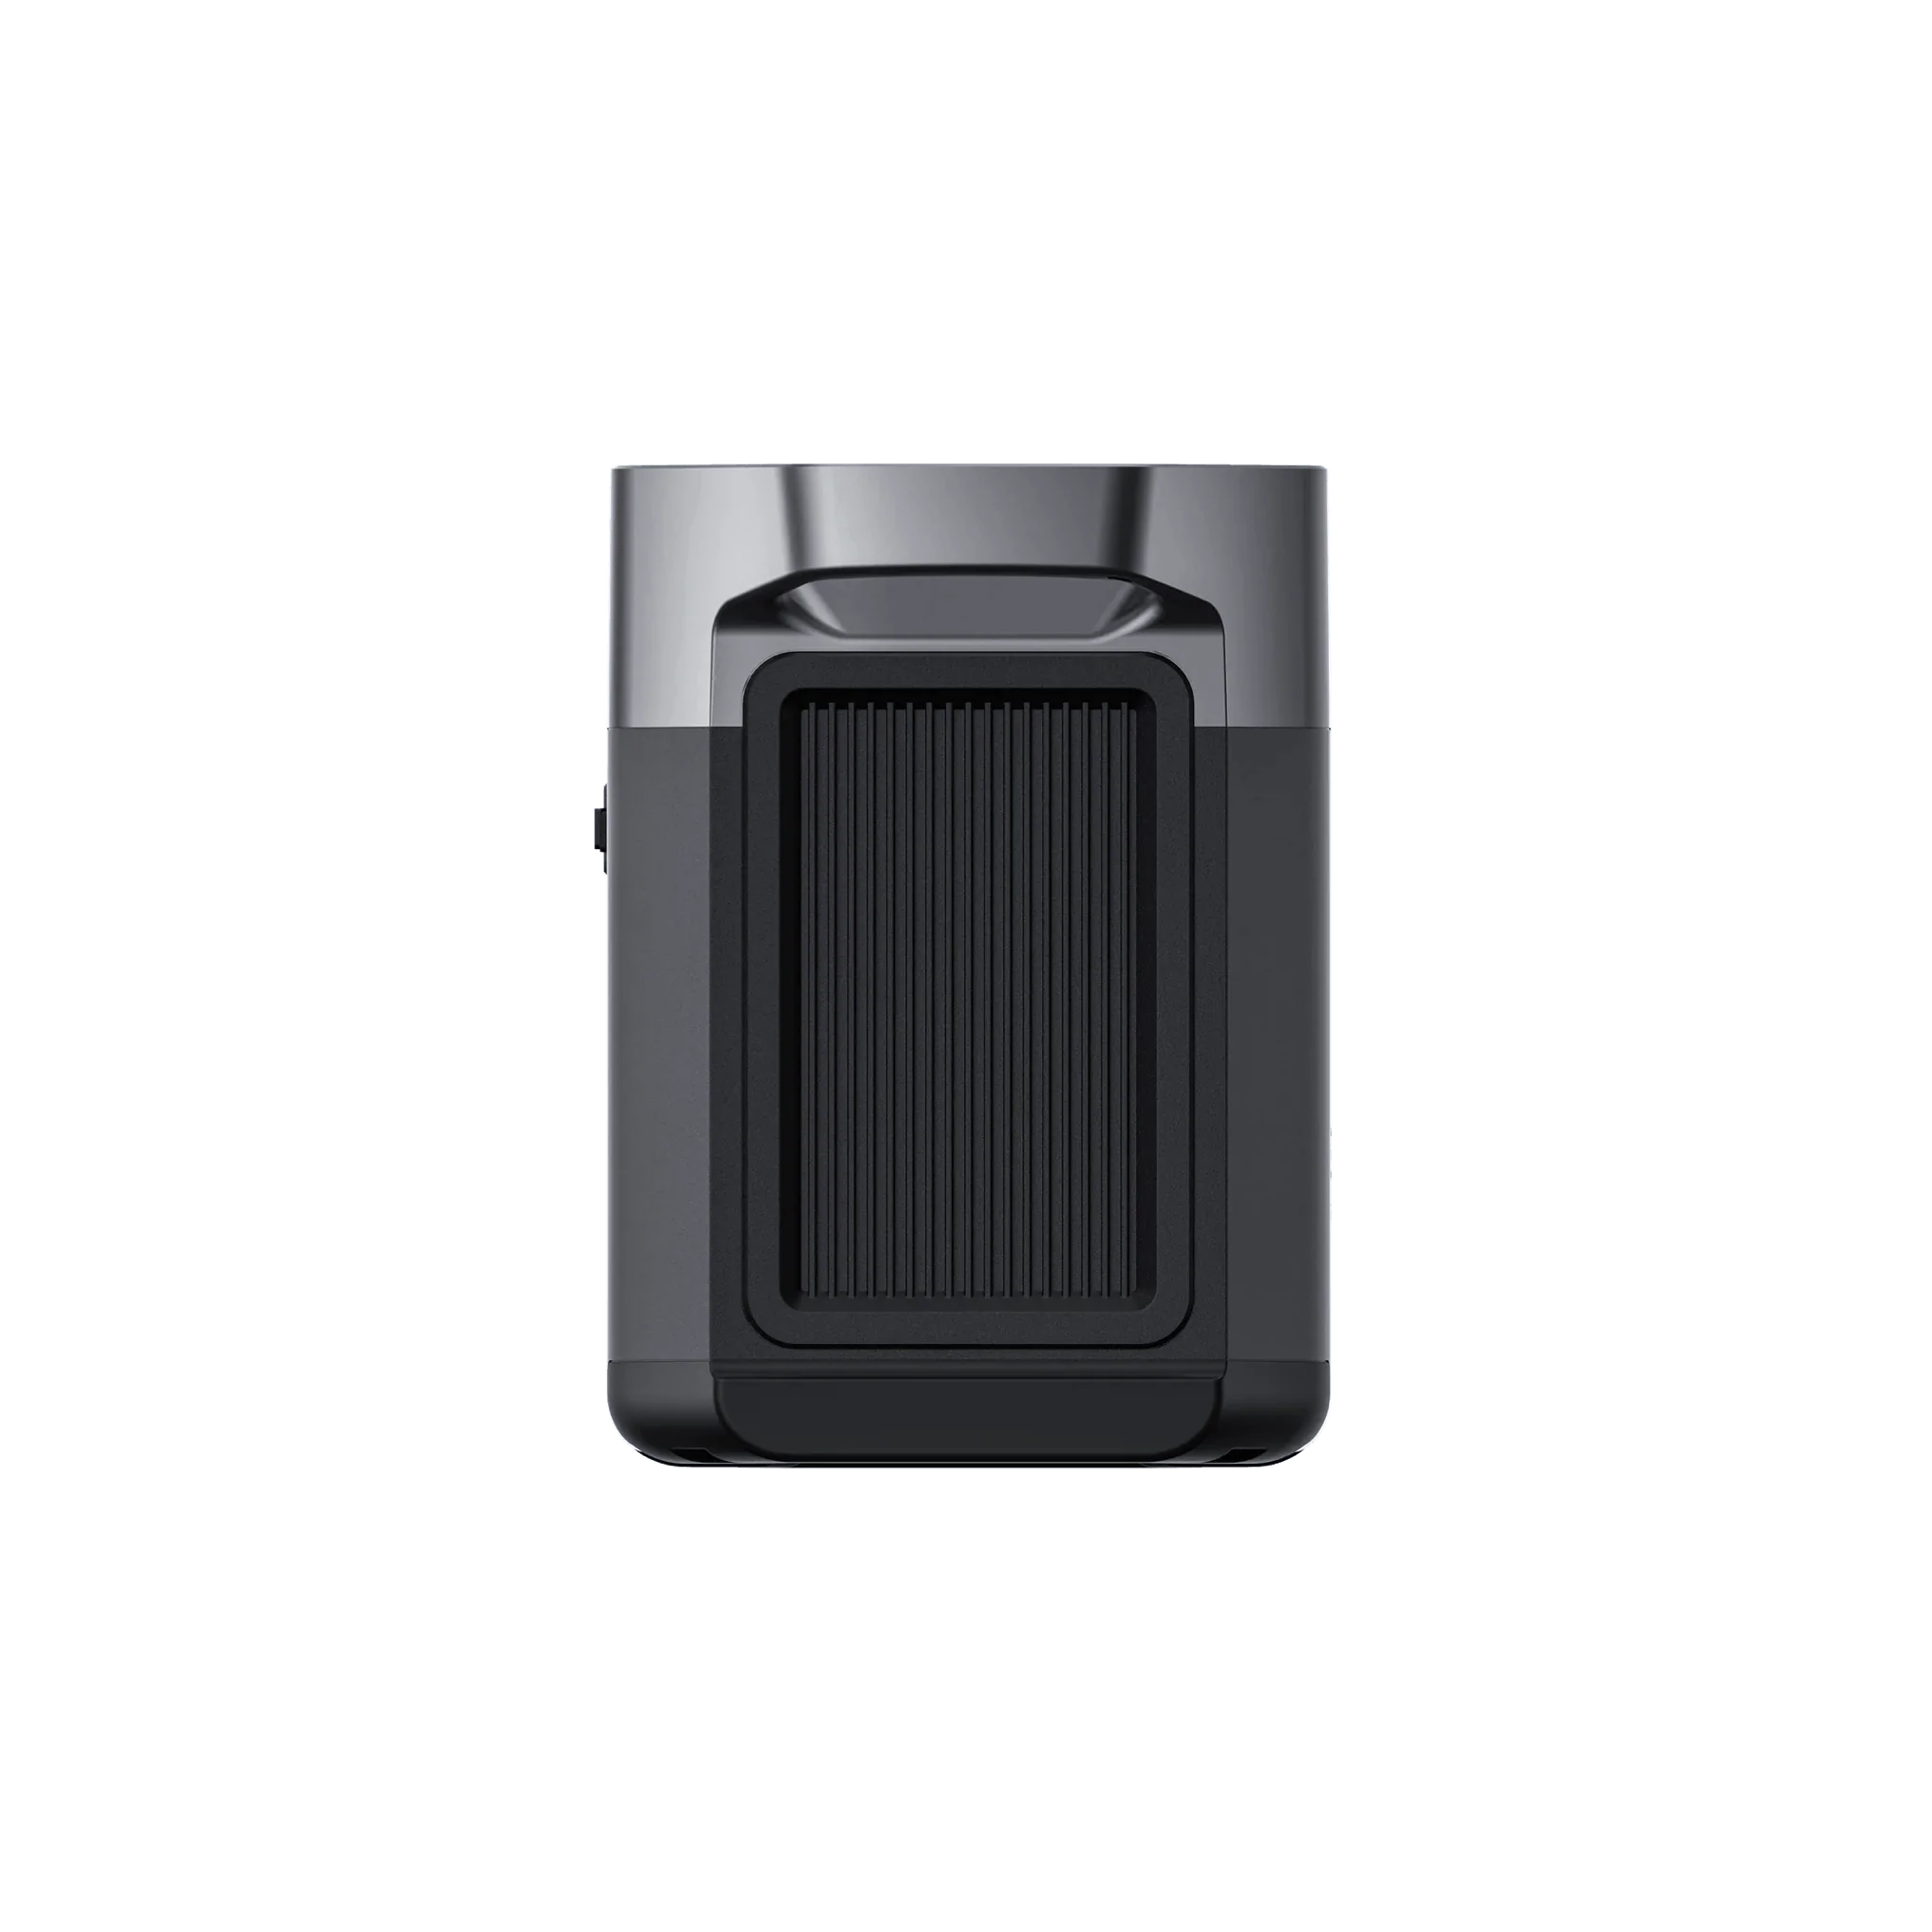 A black EcoFlow vaporizer on a white background.